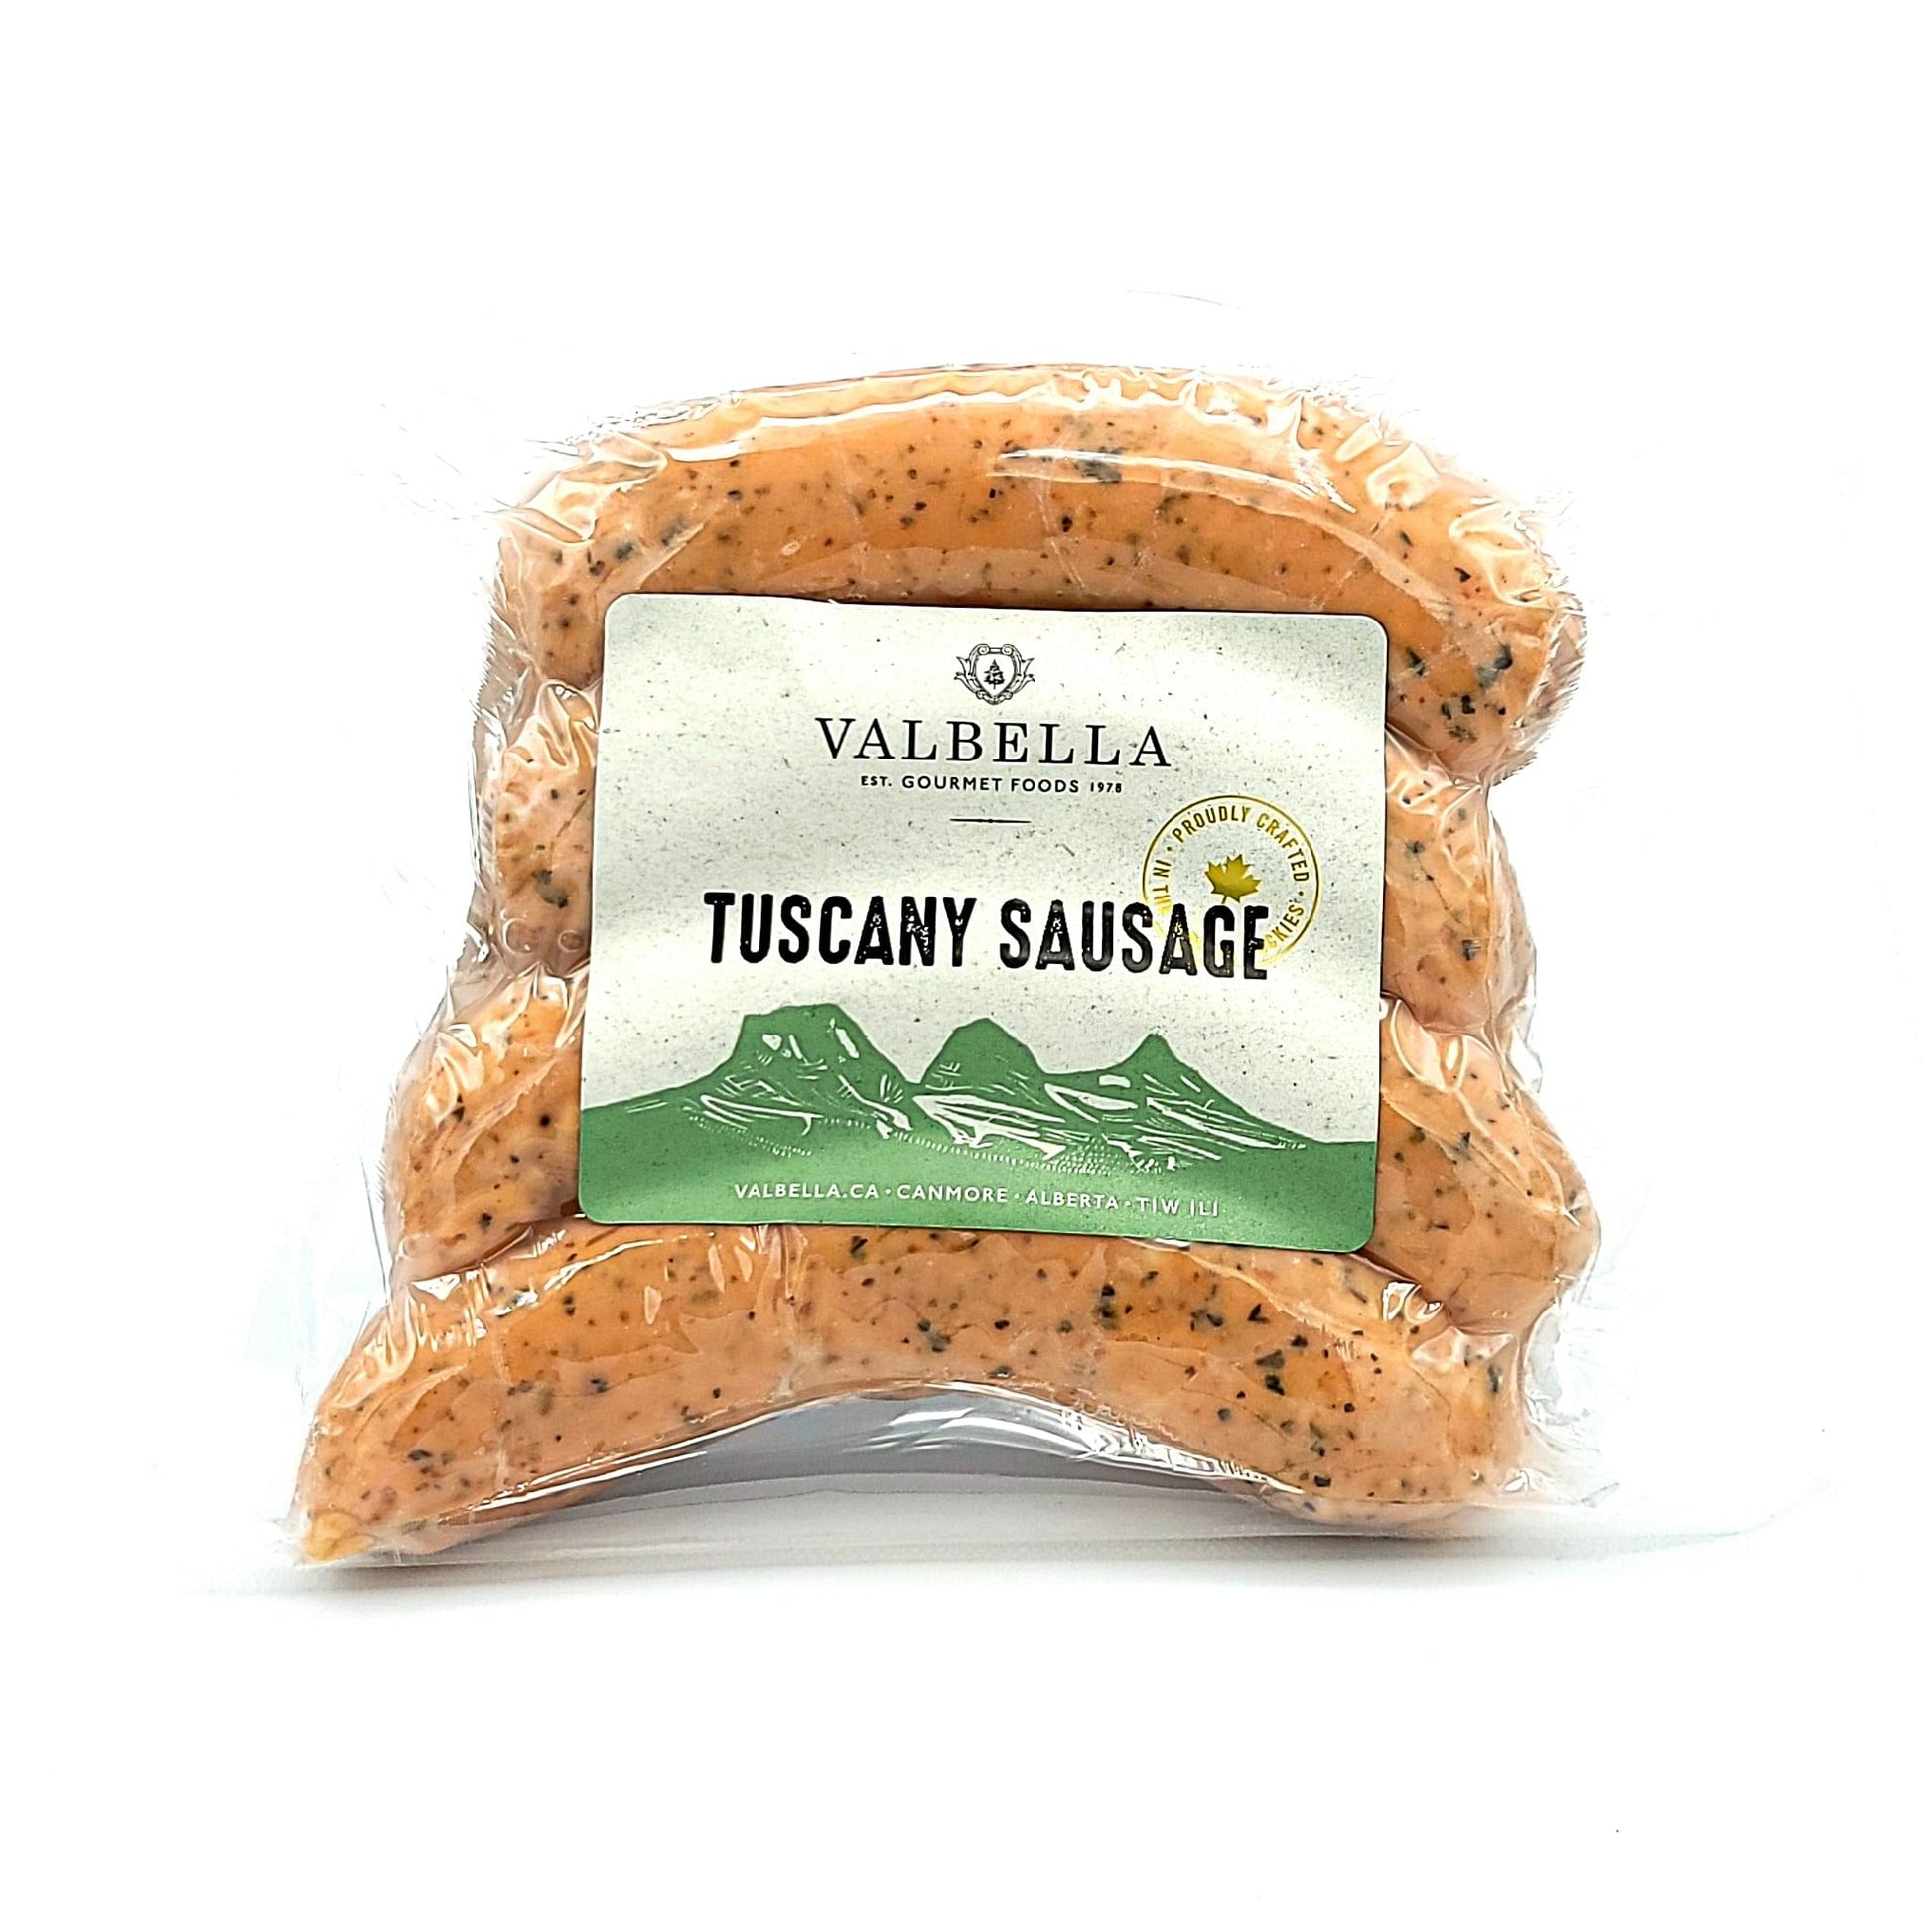 Tuscany Sausage - Valbella Gourmet Foods